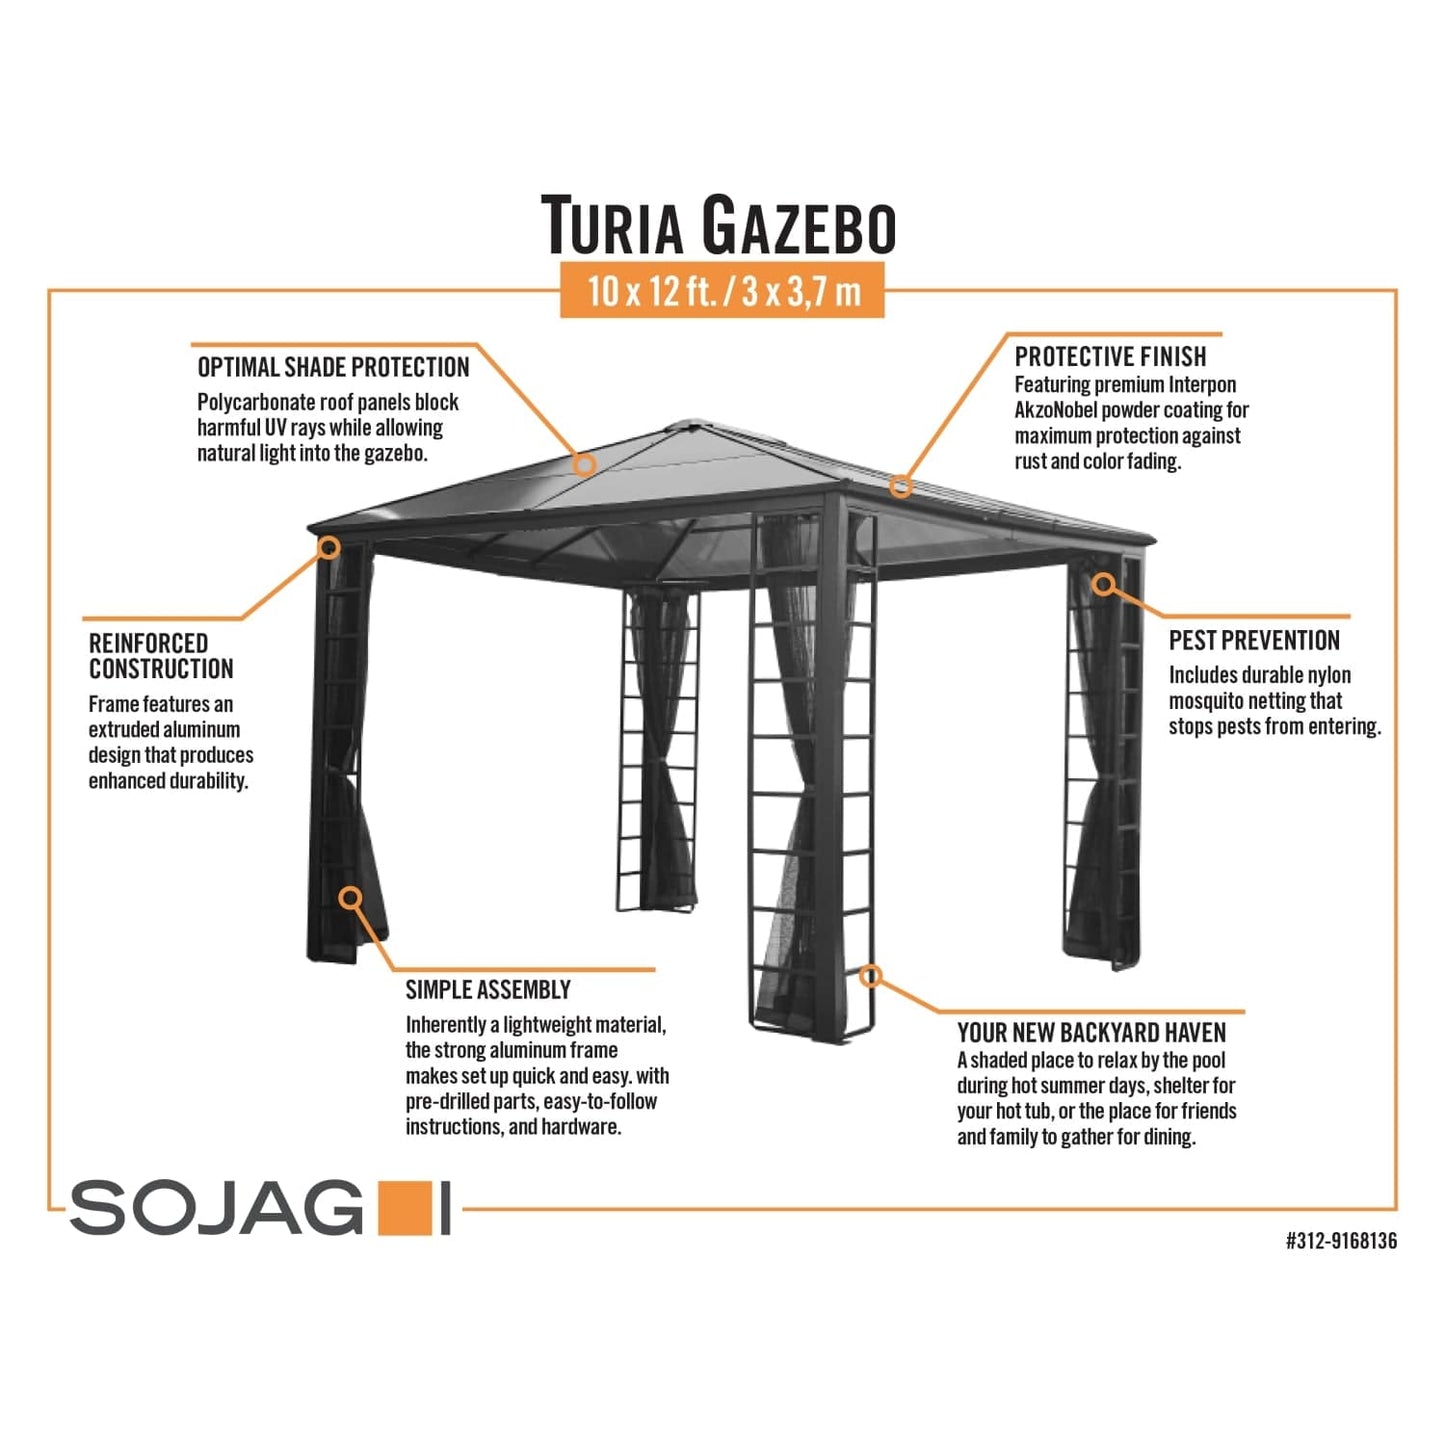 SOJAG Gazebo Accessories Sojag | Turia 10 ft. x 12 ft. Gazebo 312-9168136